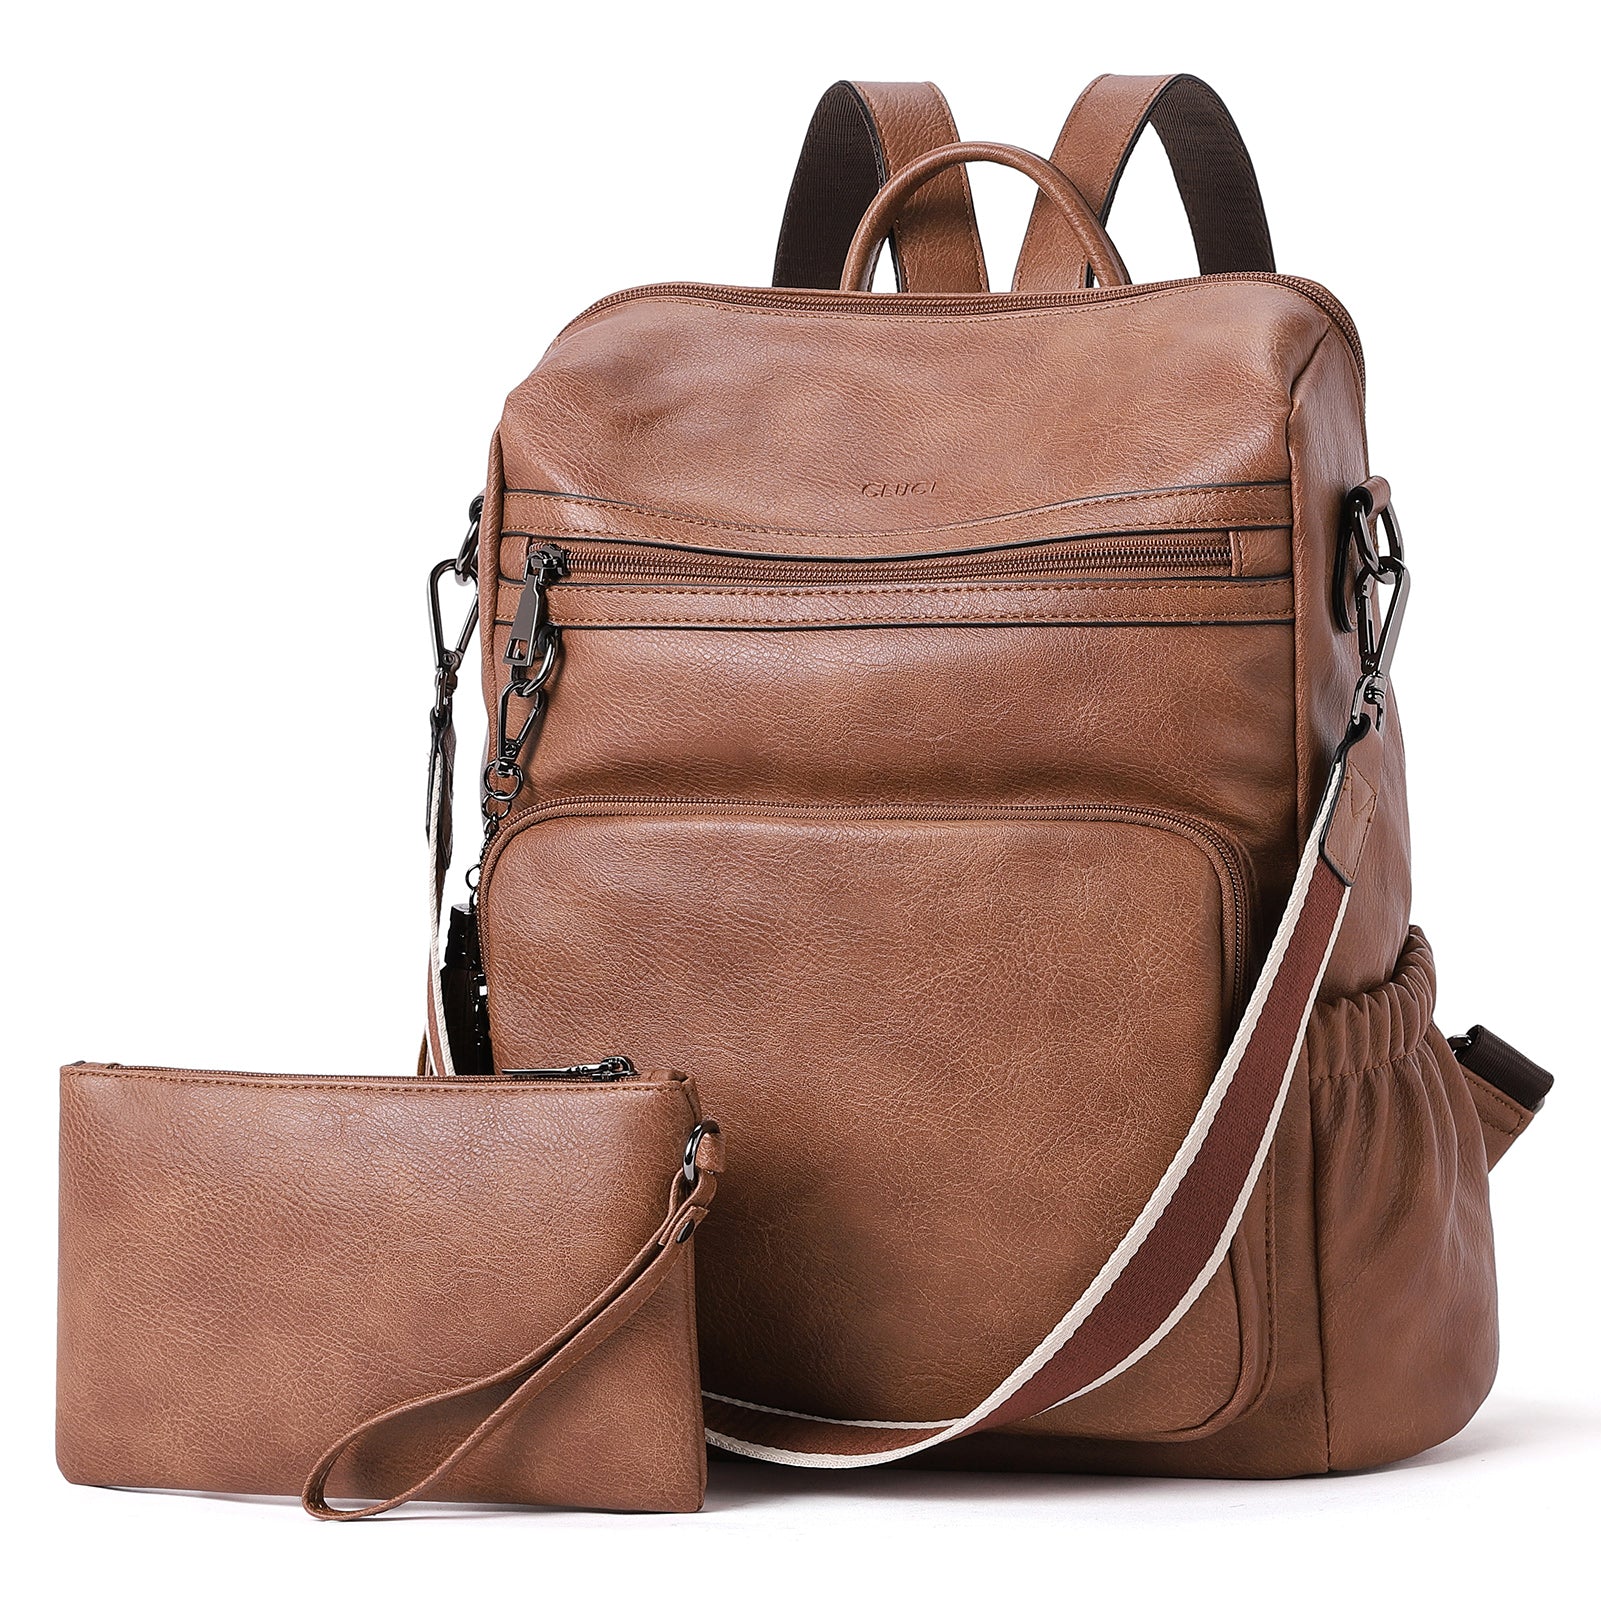 Designer Backpacks for Women - Shop Now on FARFETCH